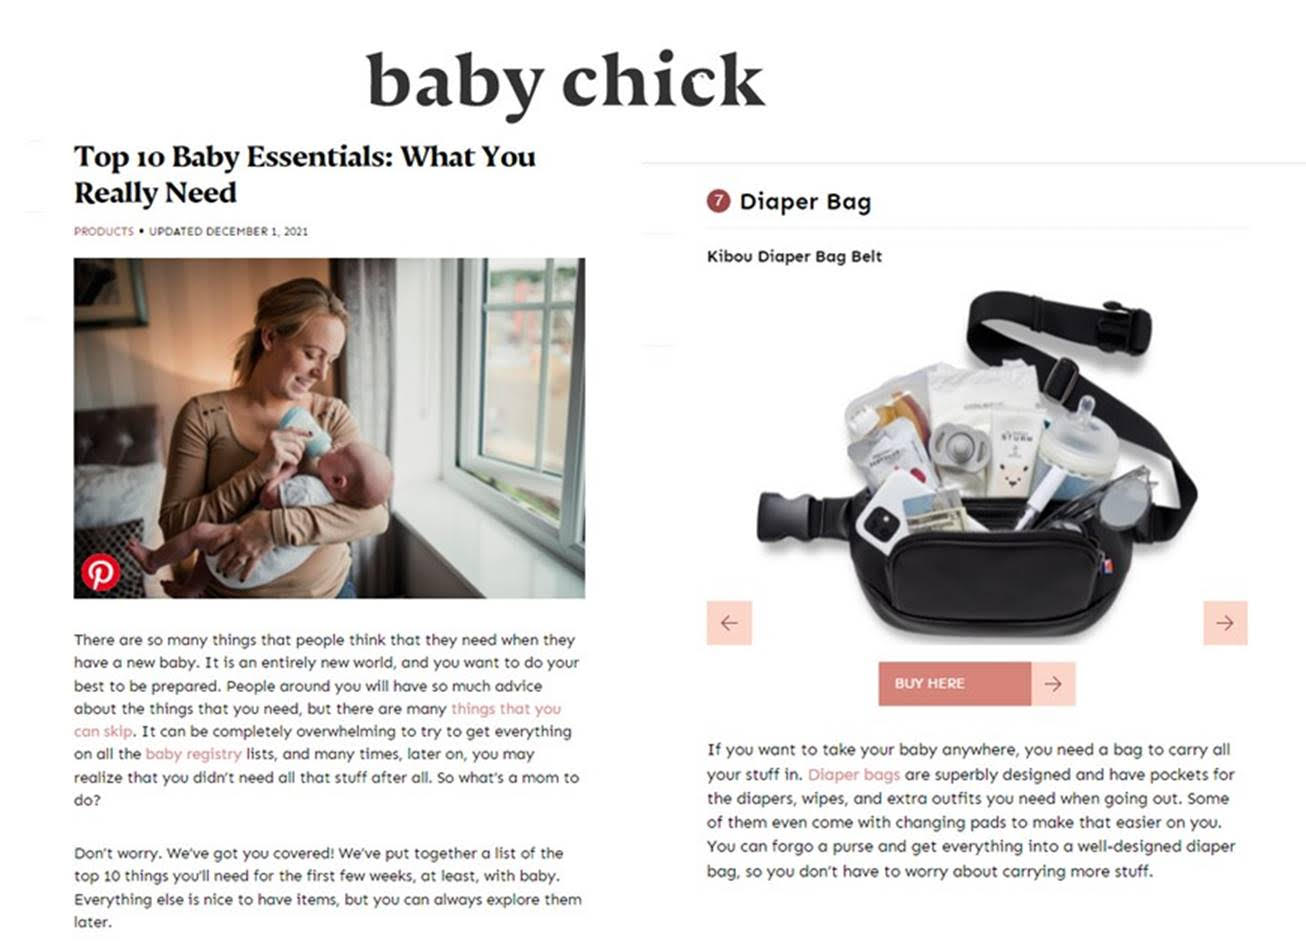 Baby Chick top 10 essentials